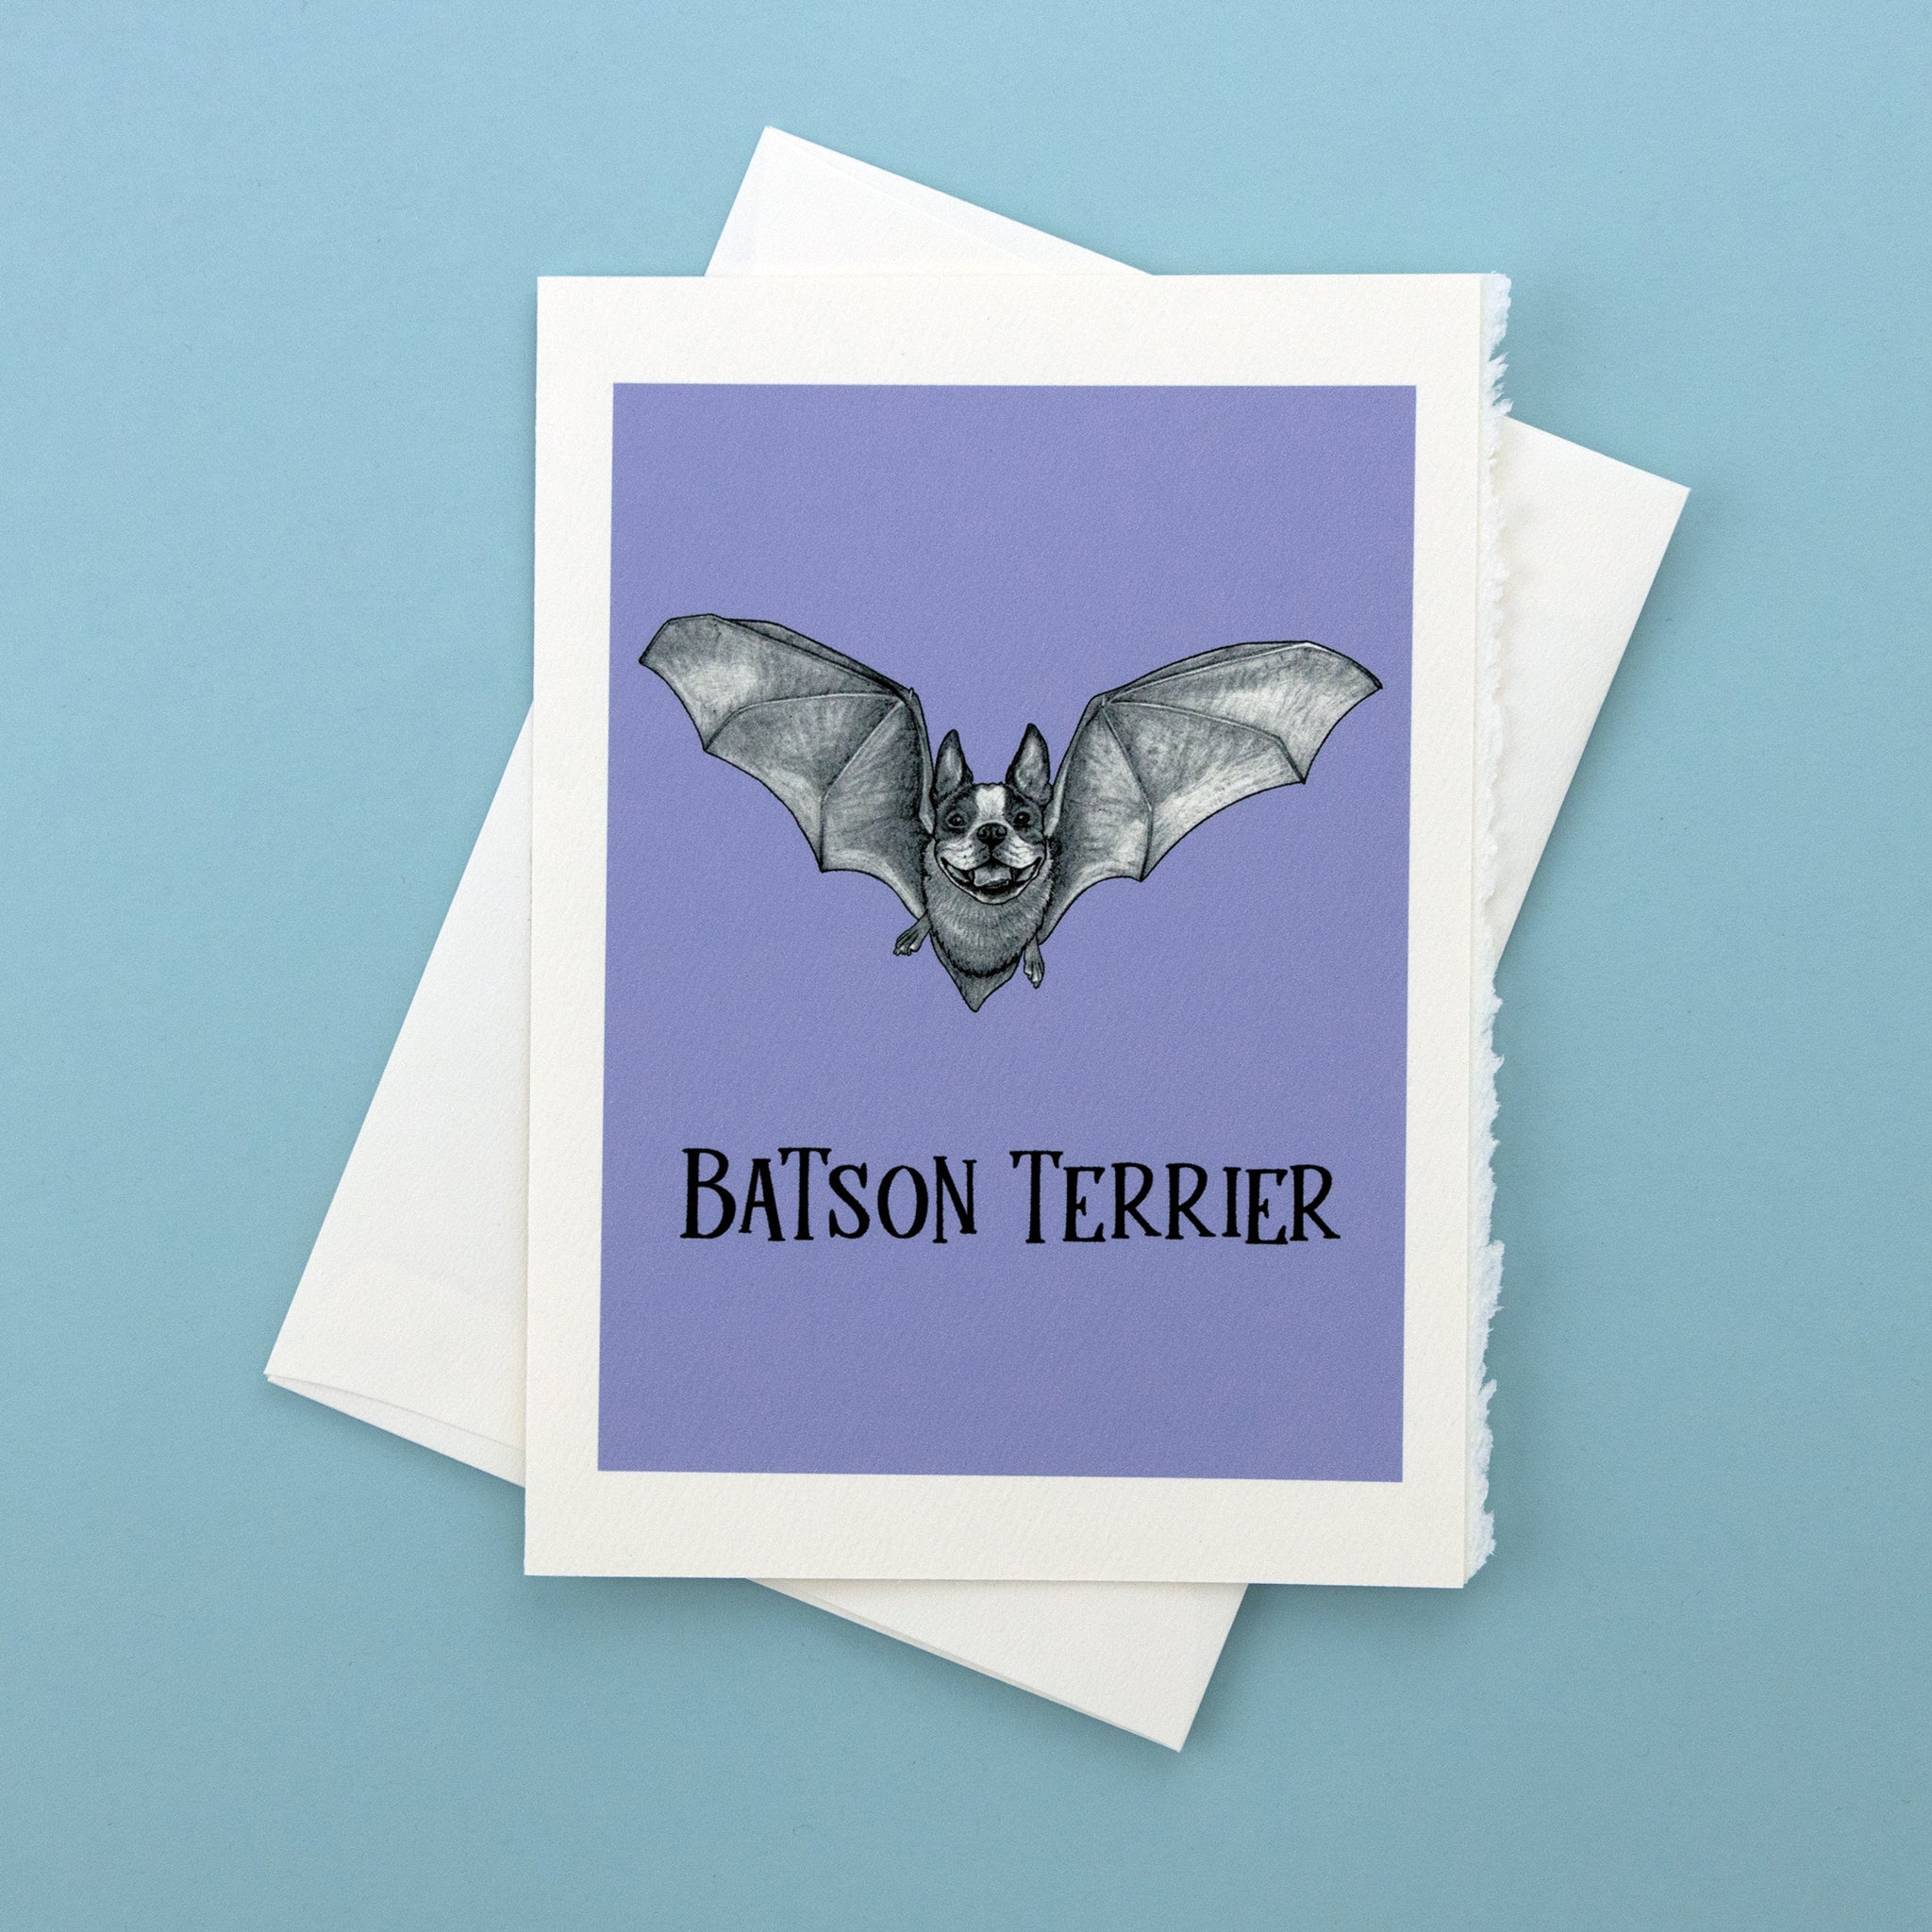 Batson Terrier | Boston Terrier + Bat Hybrid Animal | 5x7" Greeting Card